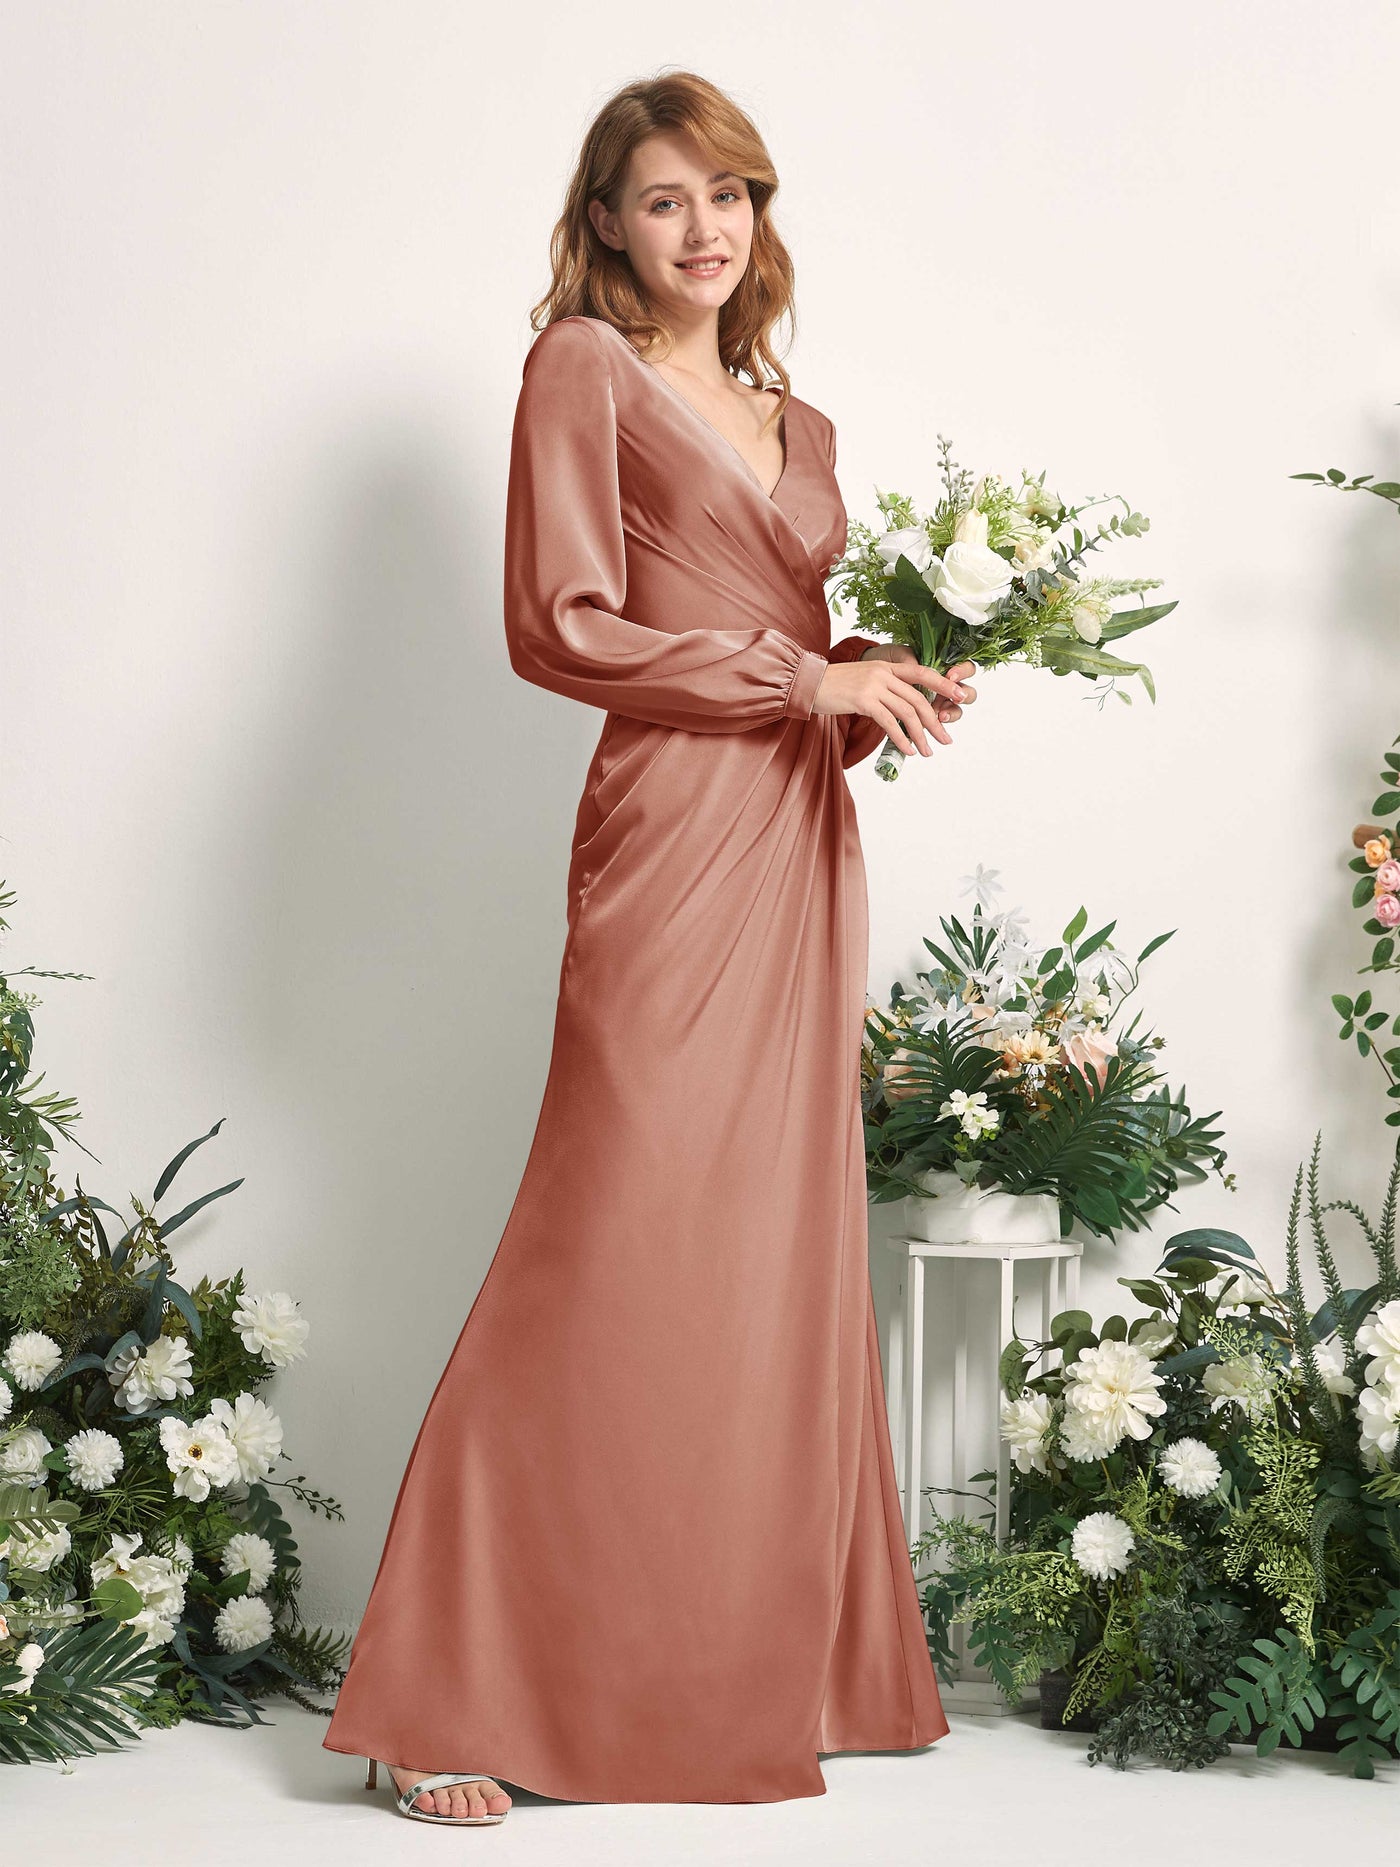 Raw Sienna Bridesmaid Dresses Bridesmaid Dress Ball Gown Satin V-neck Full Length Long Sleeves Wedding Party Dress (80225115)#color_raw-sienna